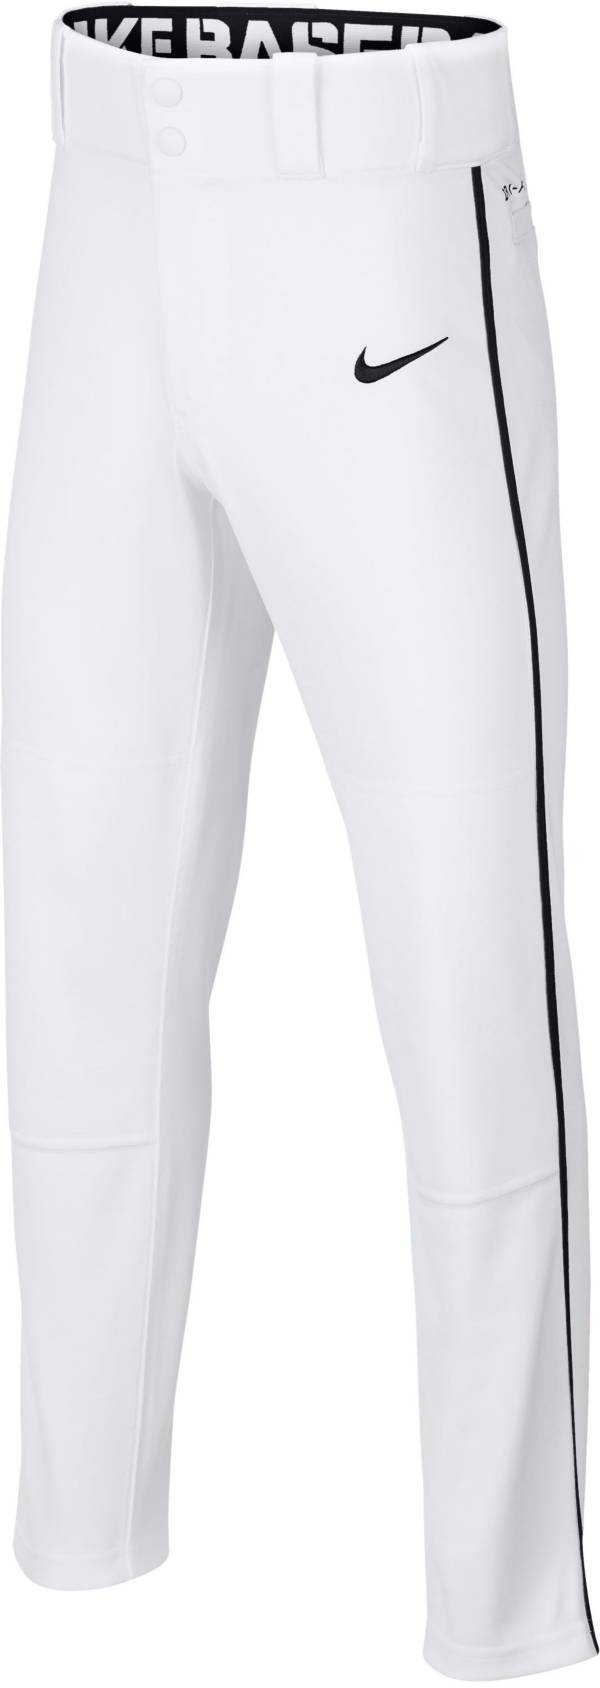 NWT Nike Boys YXL Blue/Gray/Black/White BASEBALL Dri-Fit Shorts Set XL